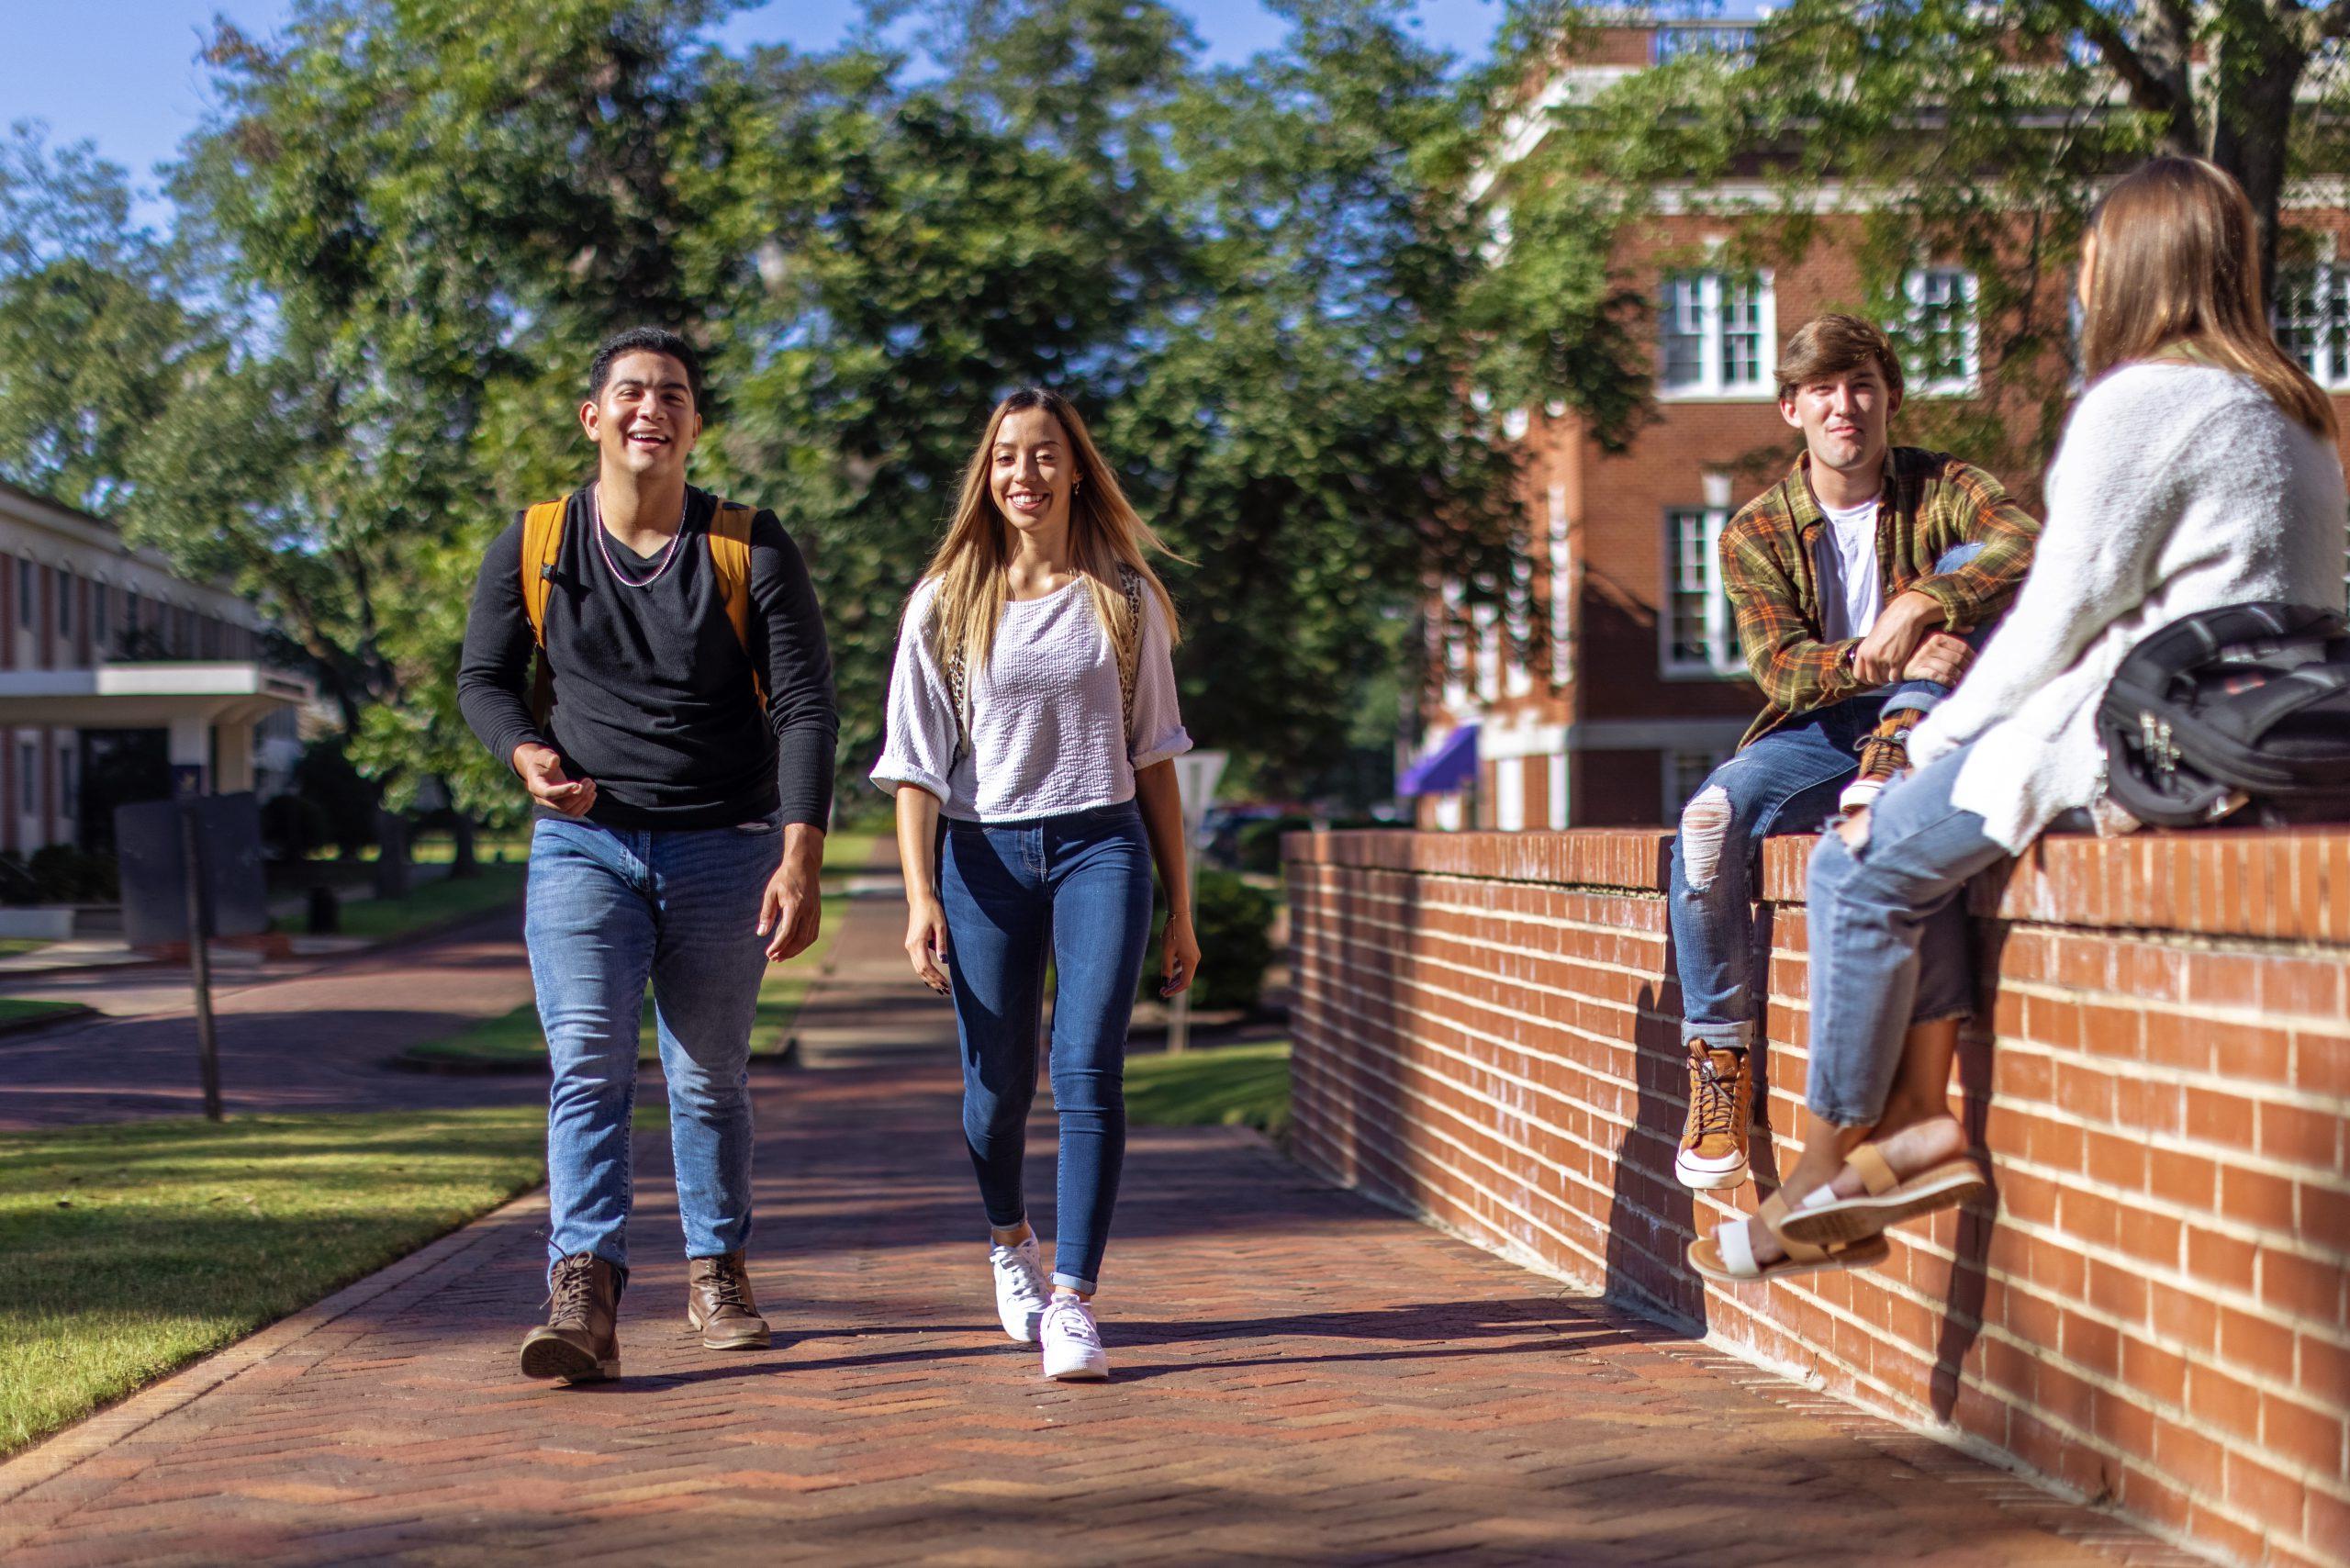 University of Montevallo students walk along a brick street on campus.